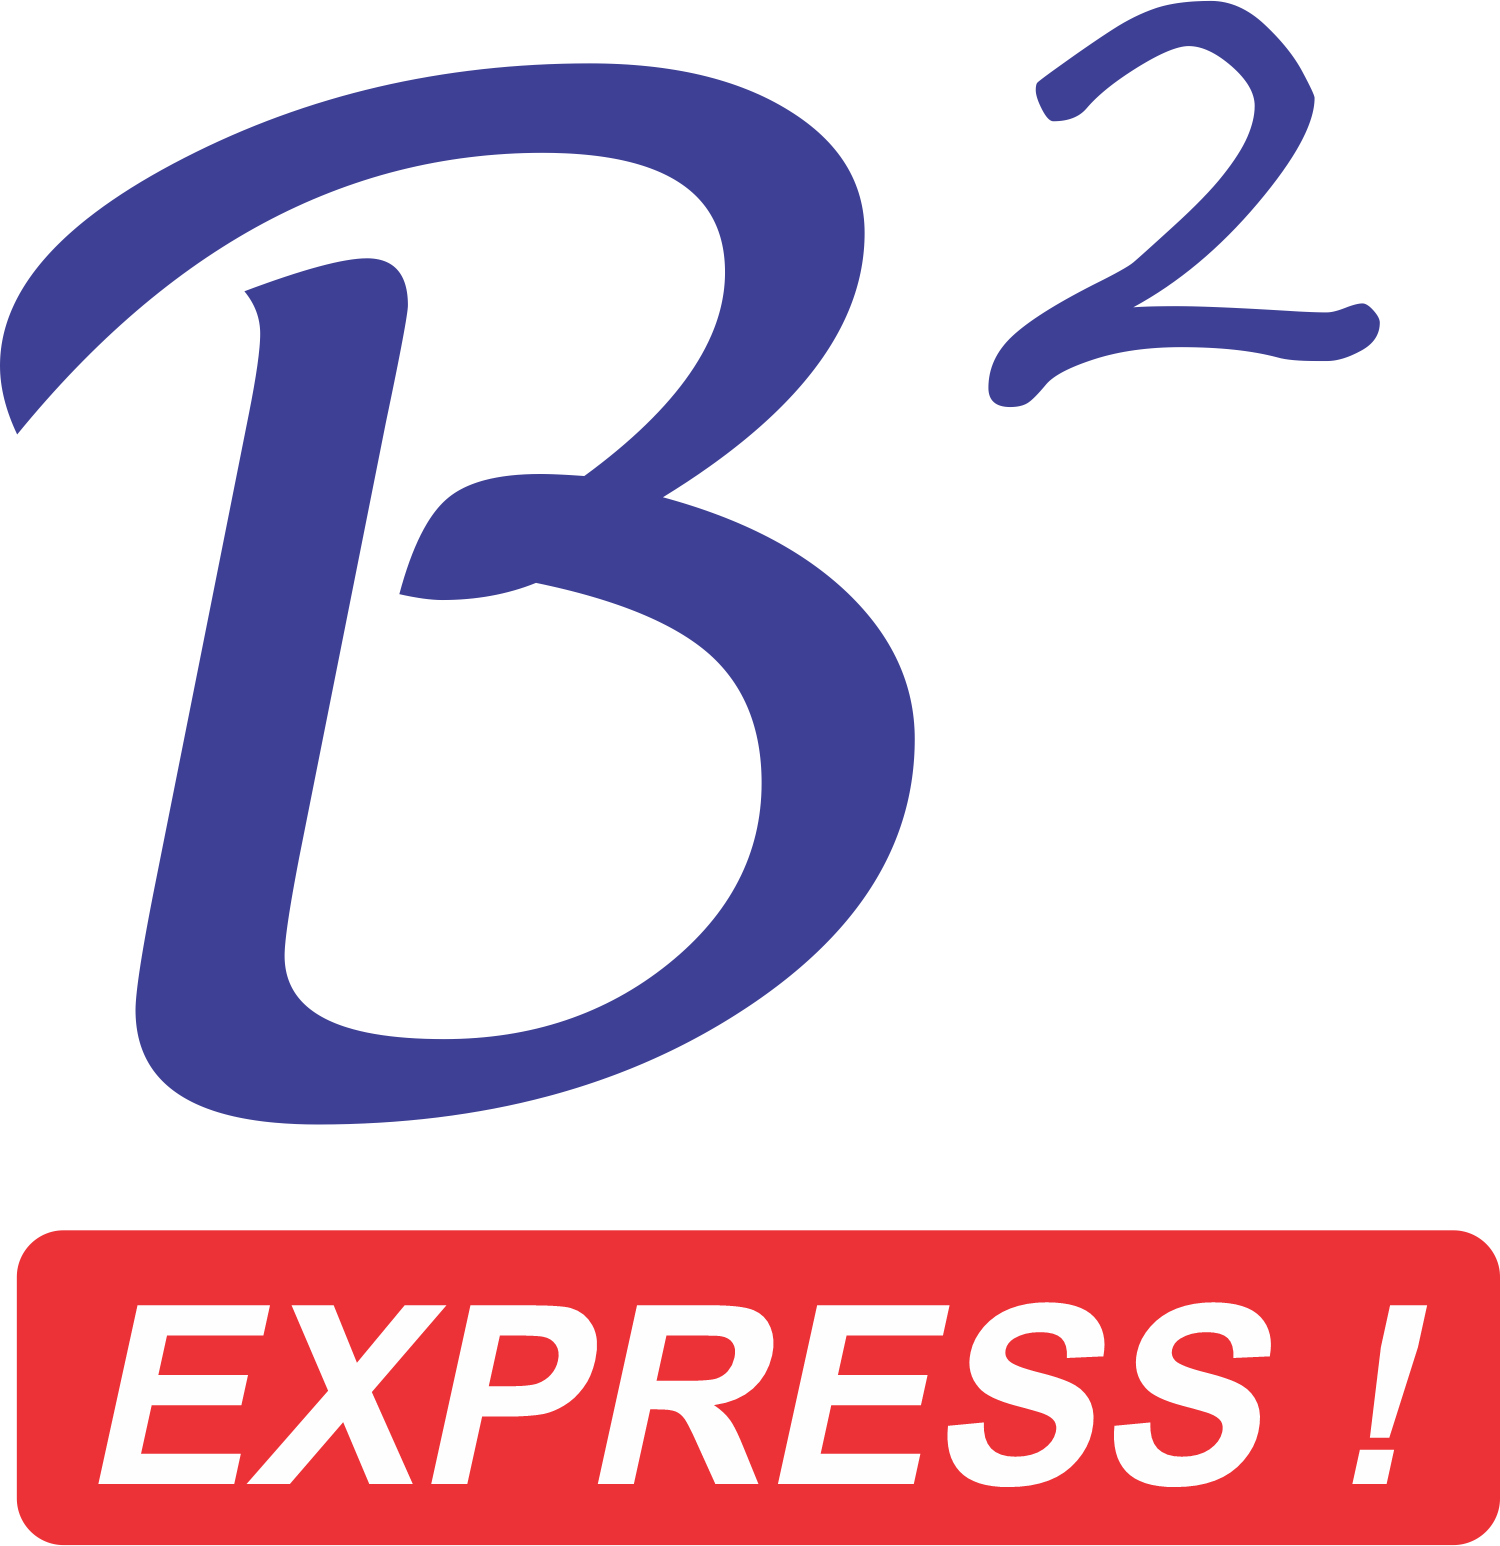 b2 express online ordering